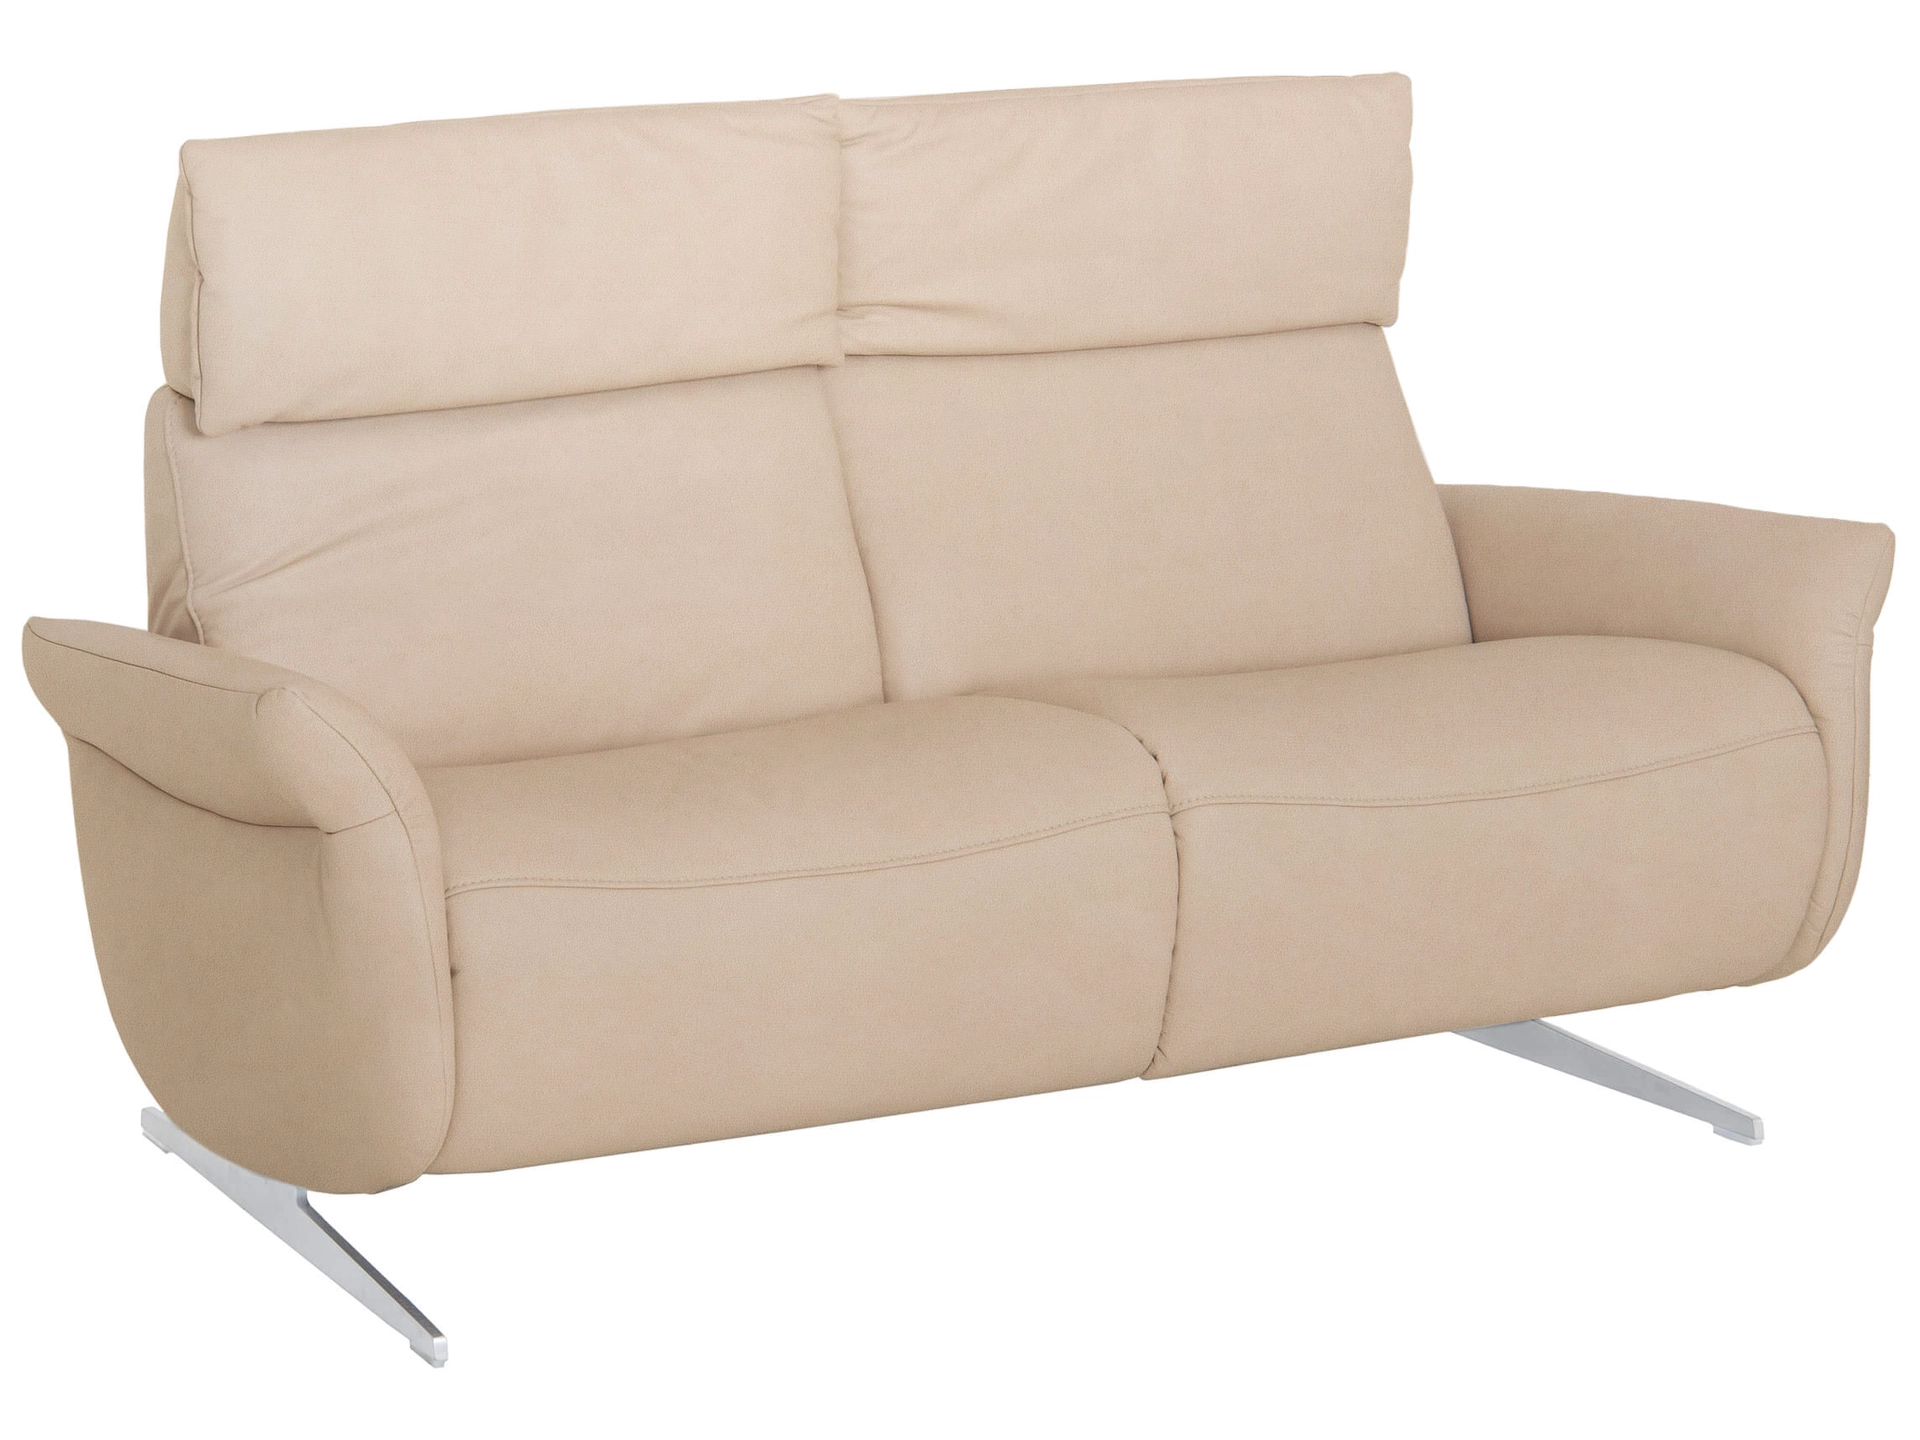 Sofa Chester Basic B: 169 cm Himolla / Farbe: Kiesel / Material: Stoff Basic